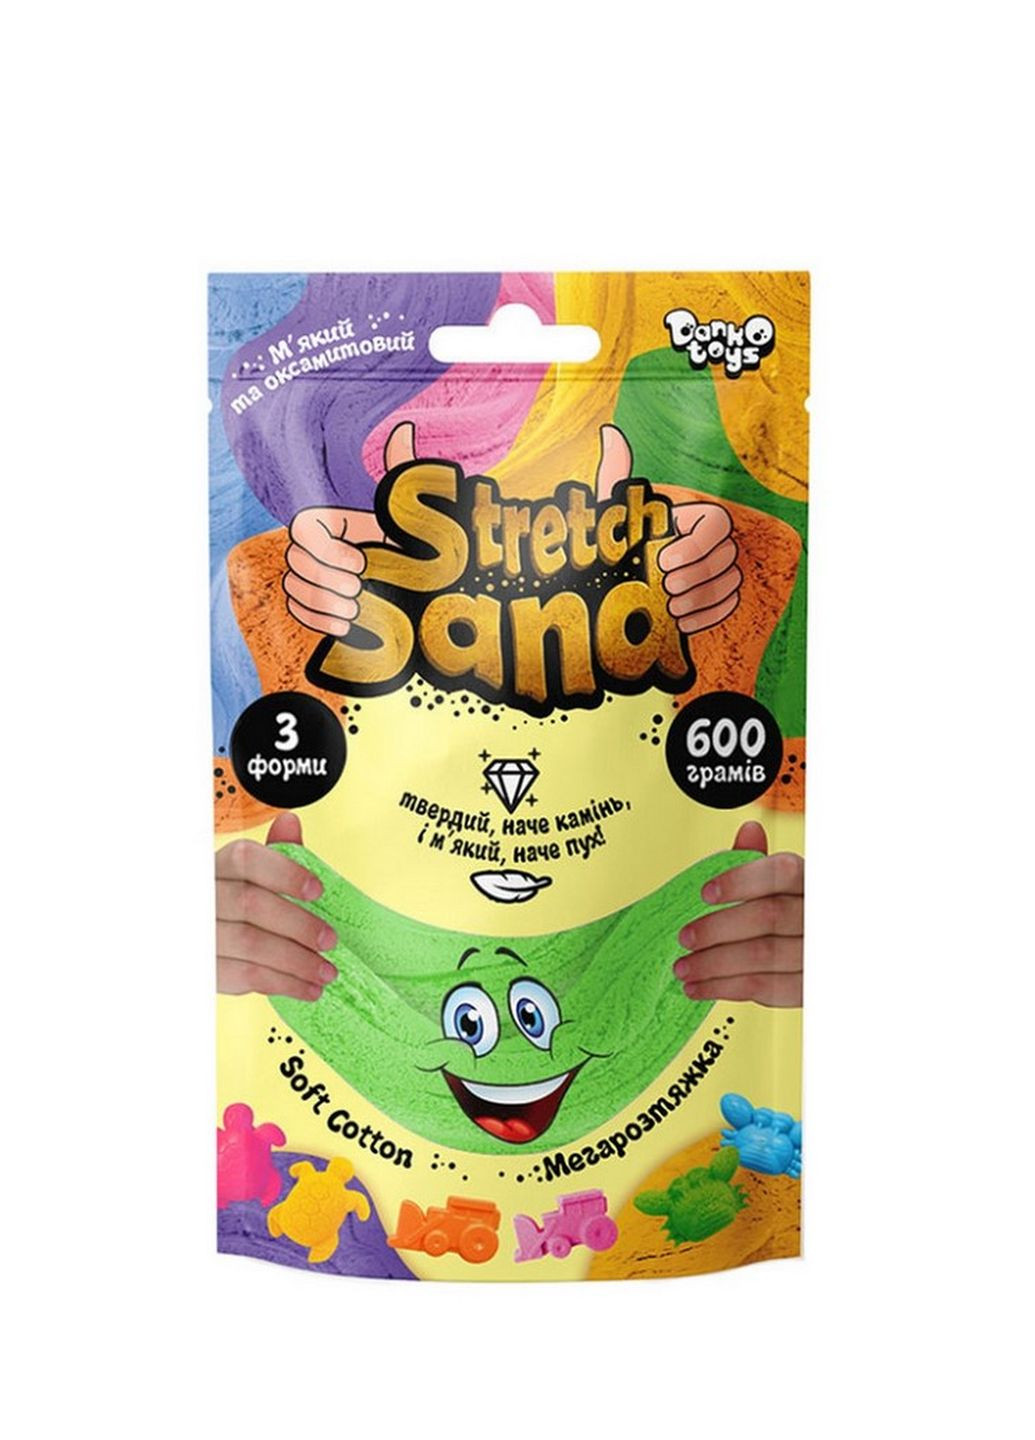 Набор креативного творчества "Stretch Sand" STS-04-01U пакет 600 гр (Зеленый) Danko Toys (266631675)